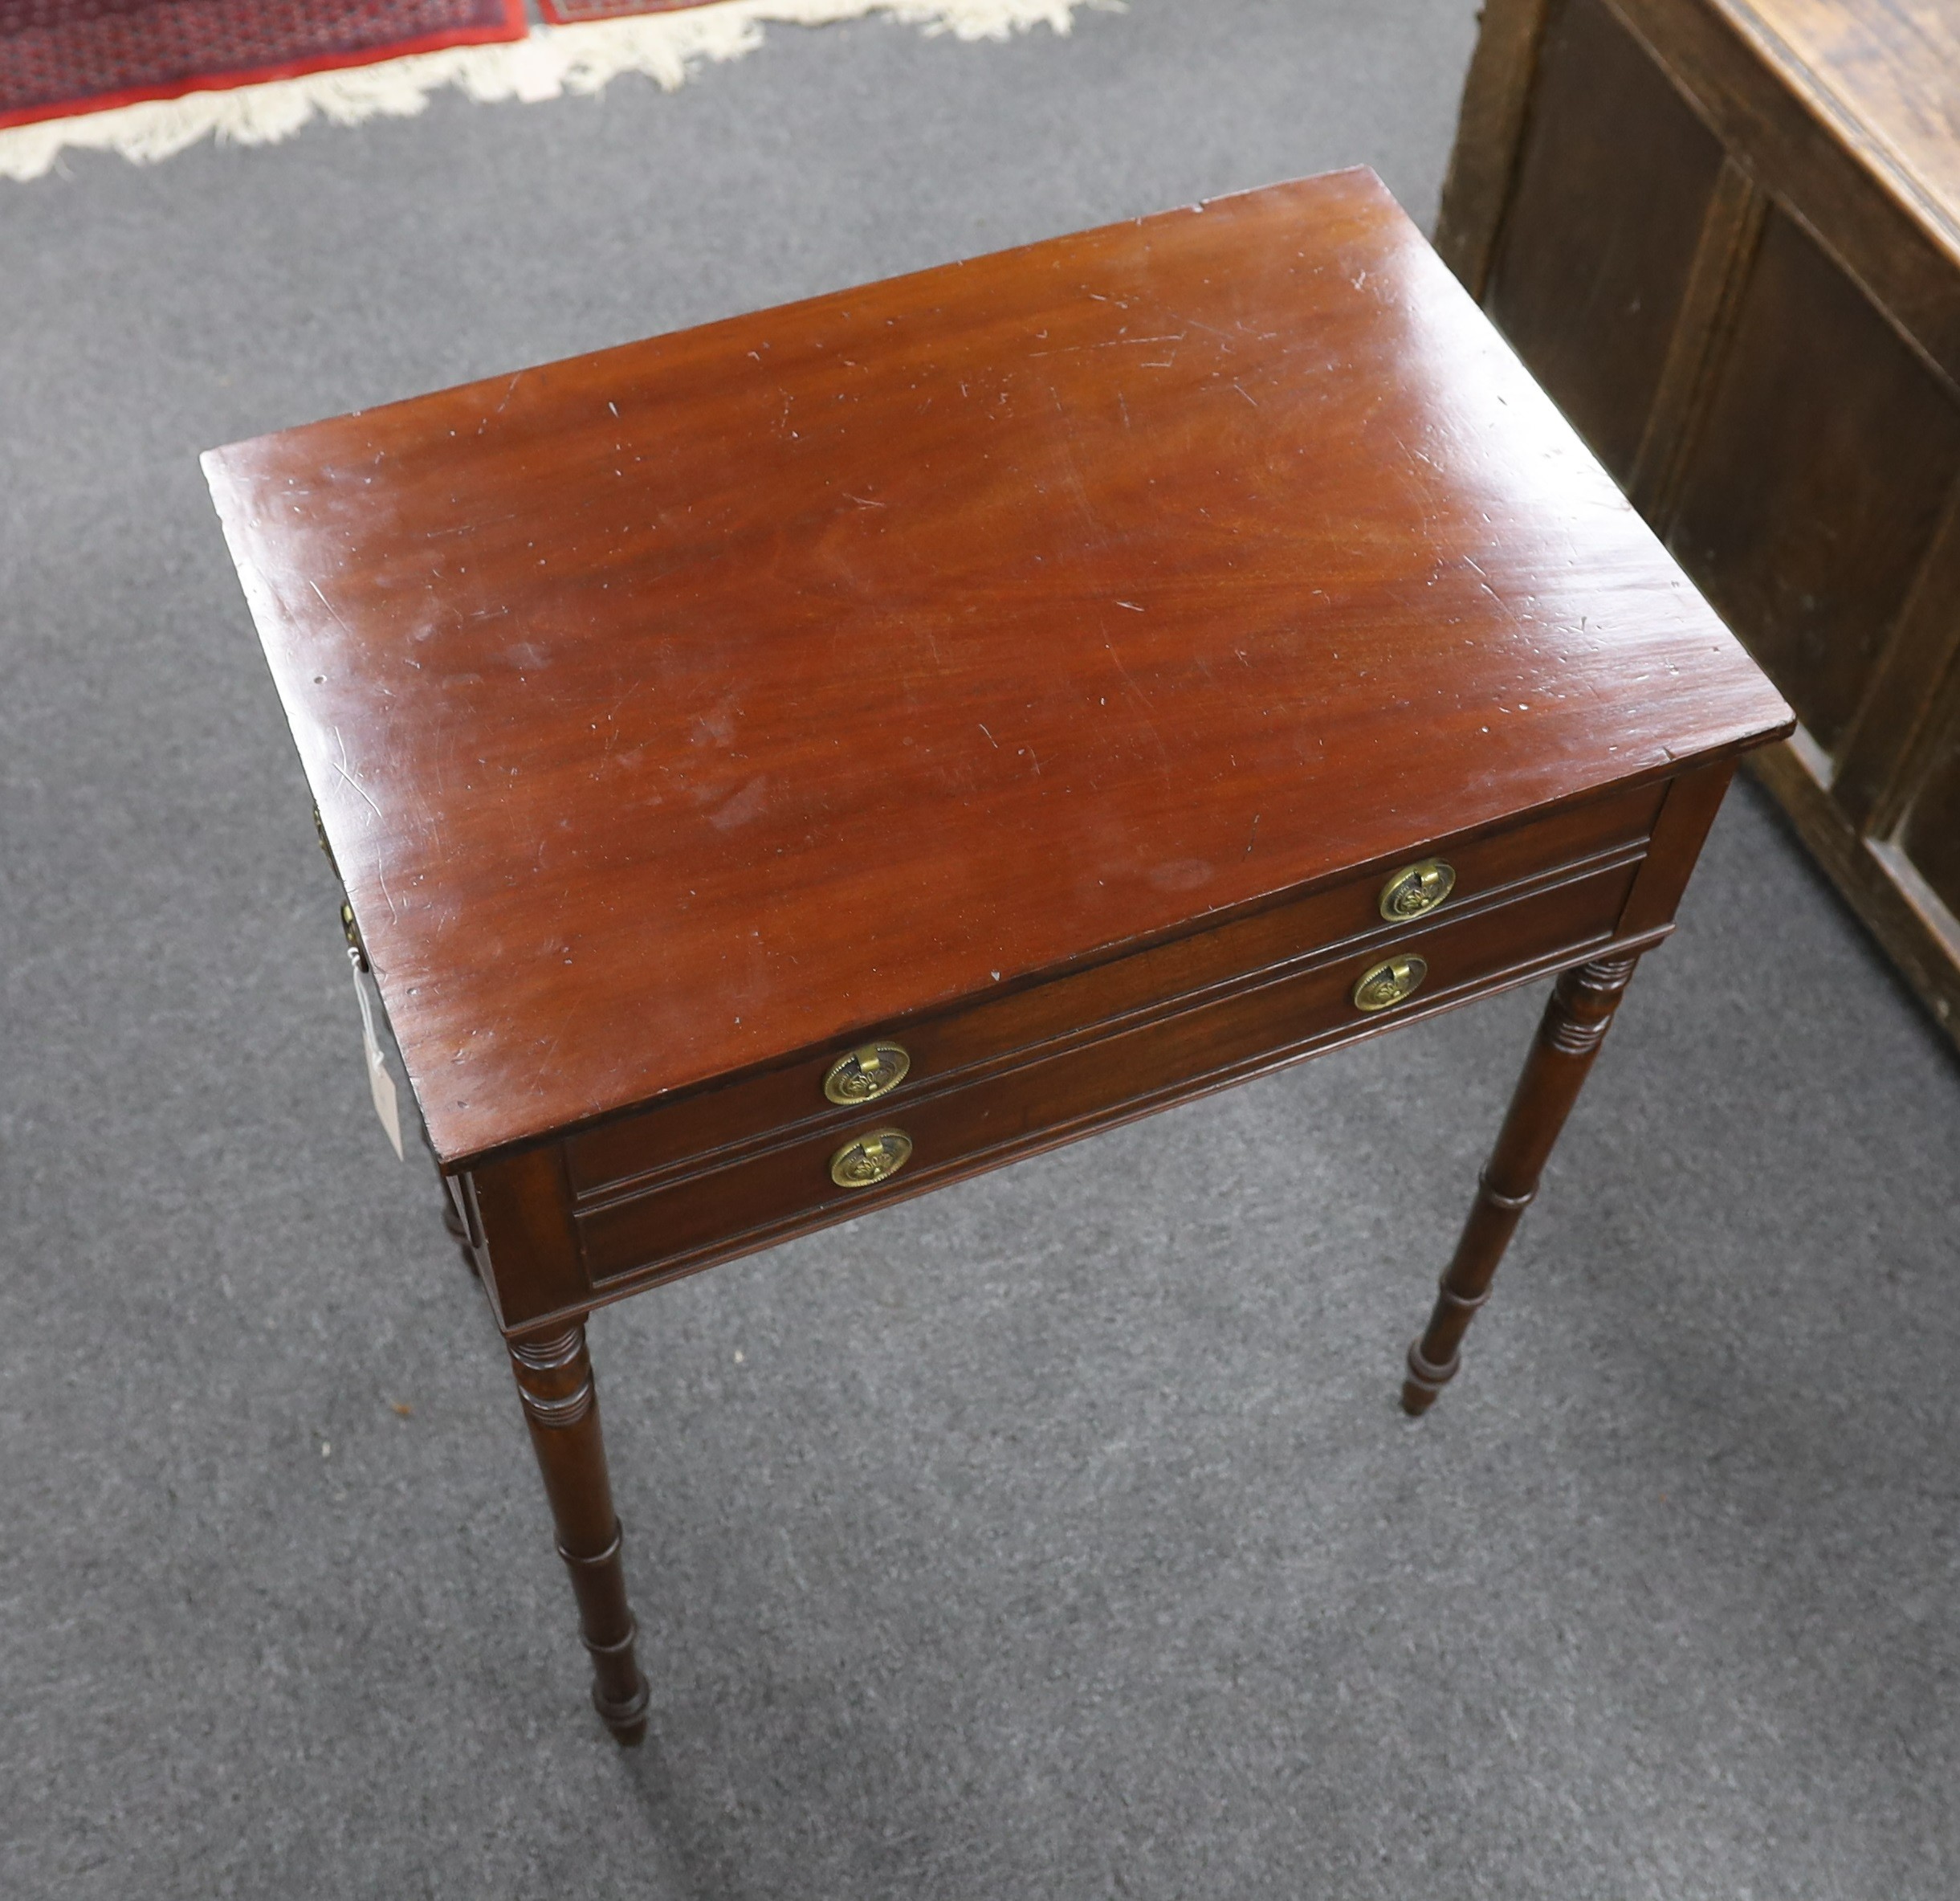 A Regency rectangular mahogany four drawer side table, width 60cm, depth 40cm, height 72cm - Image 2 of 3